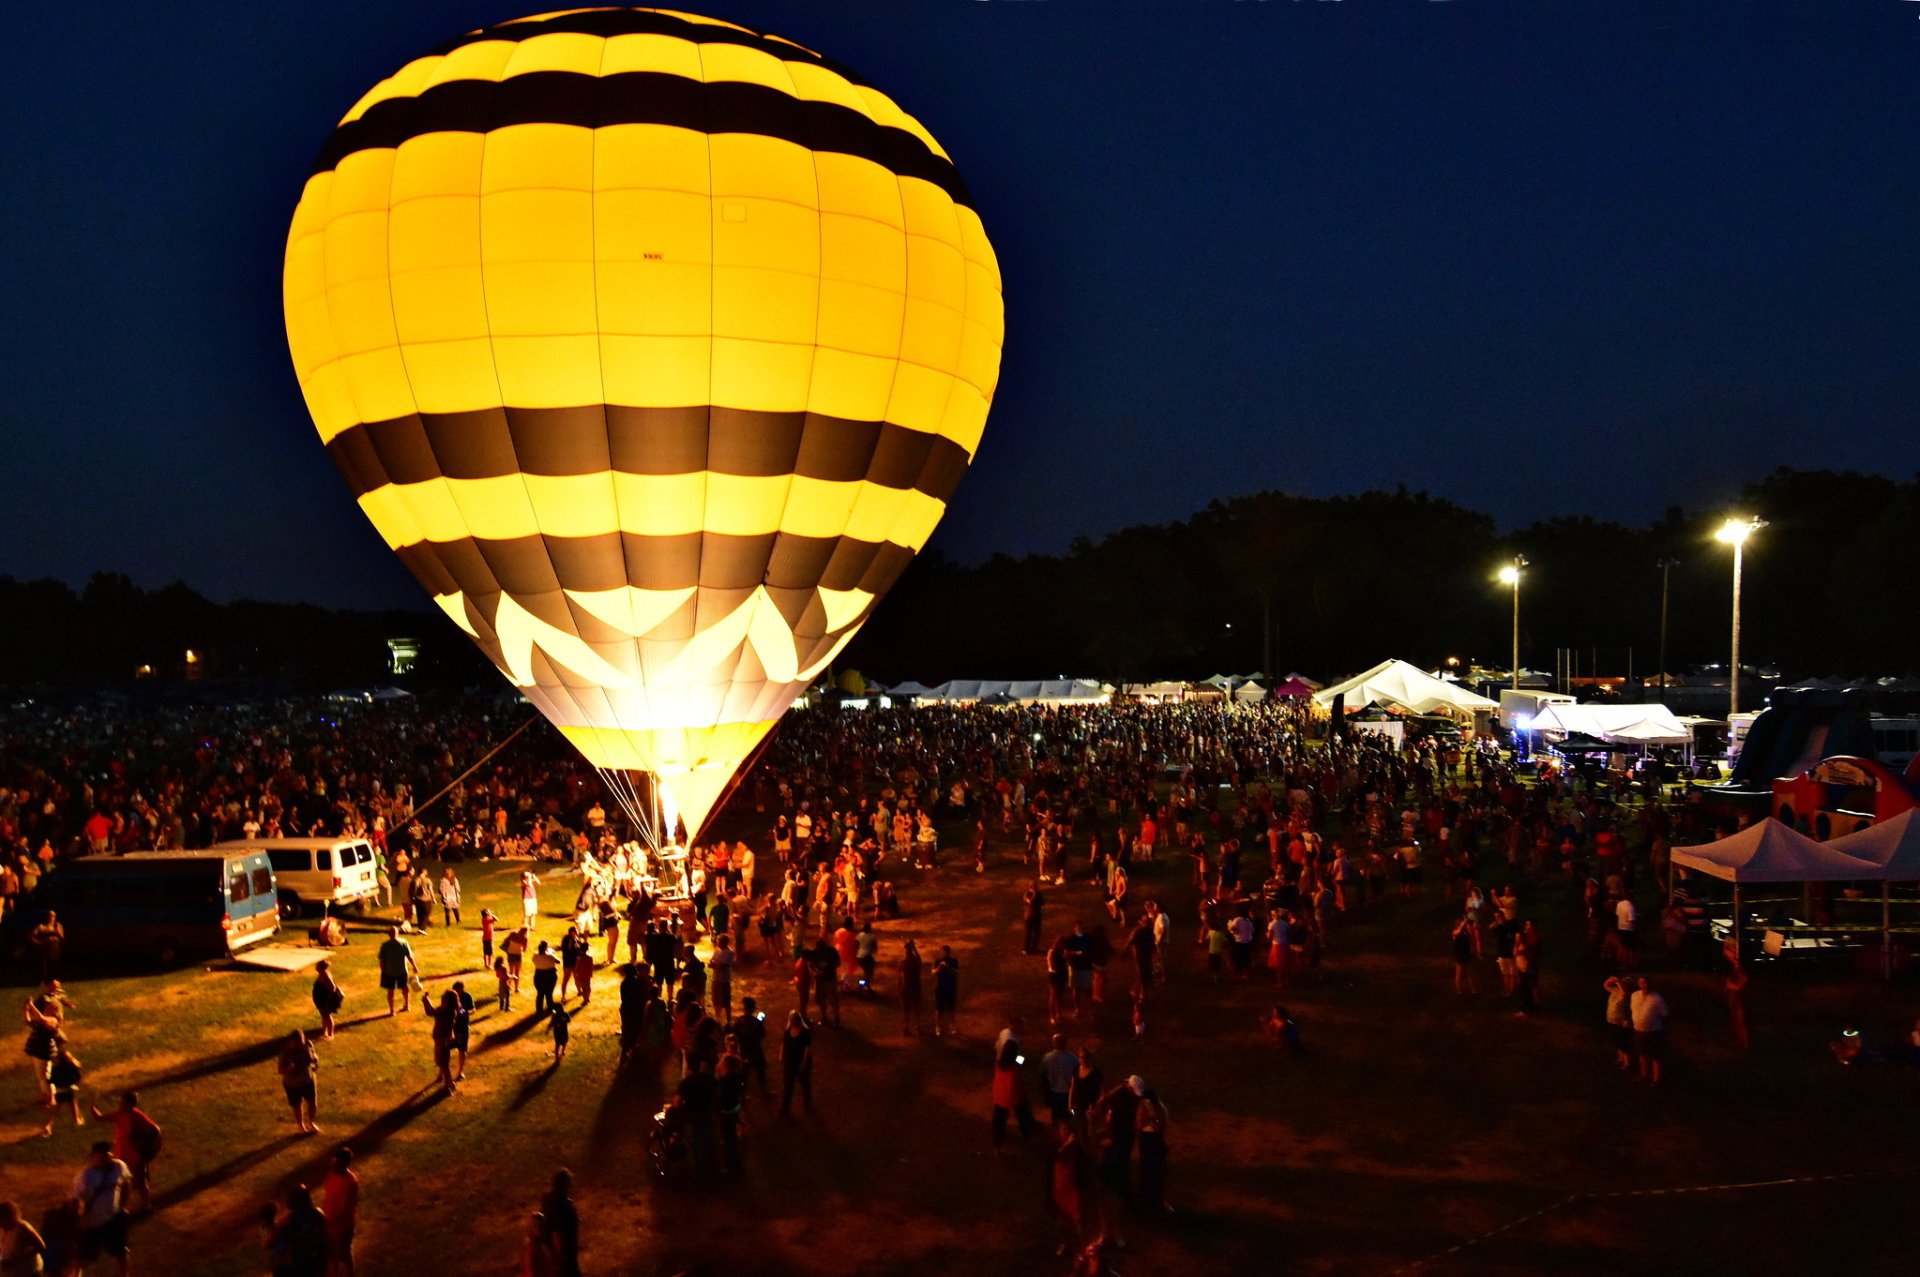 Plainville Hot Air Balloon Festival